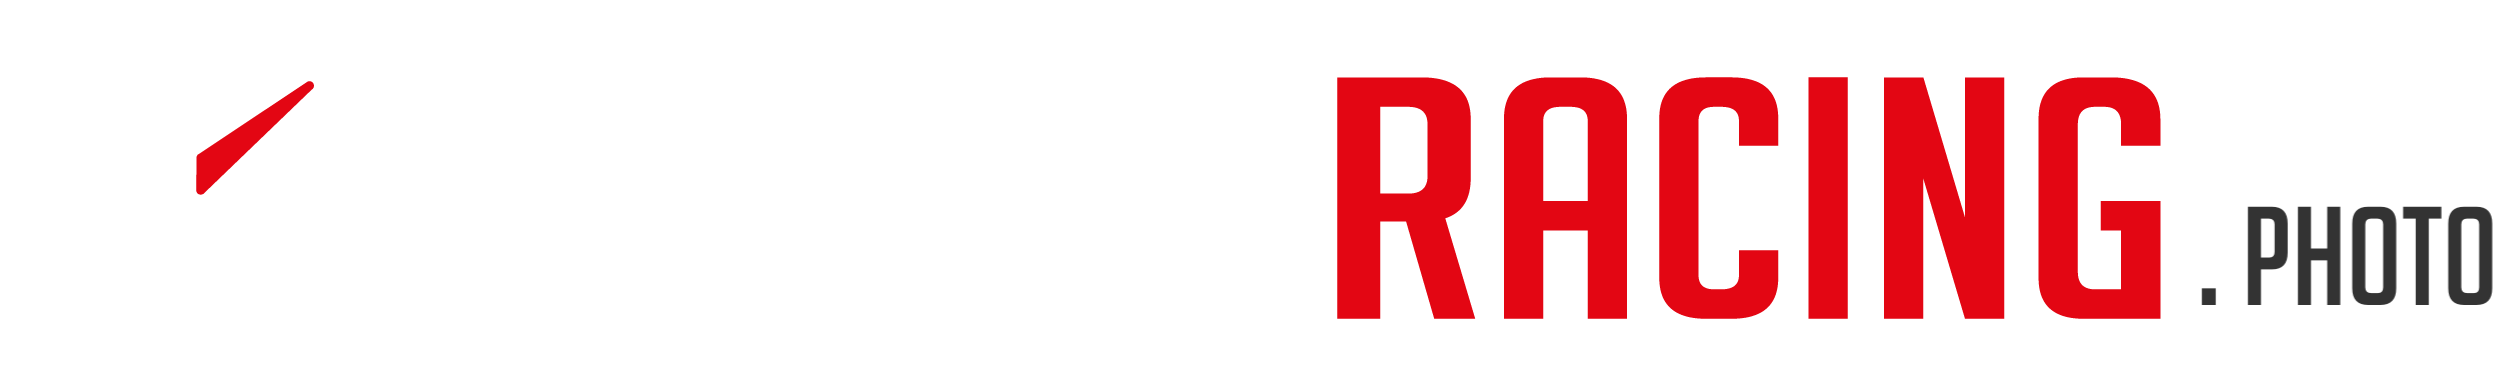 Logo FranceRacing